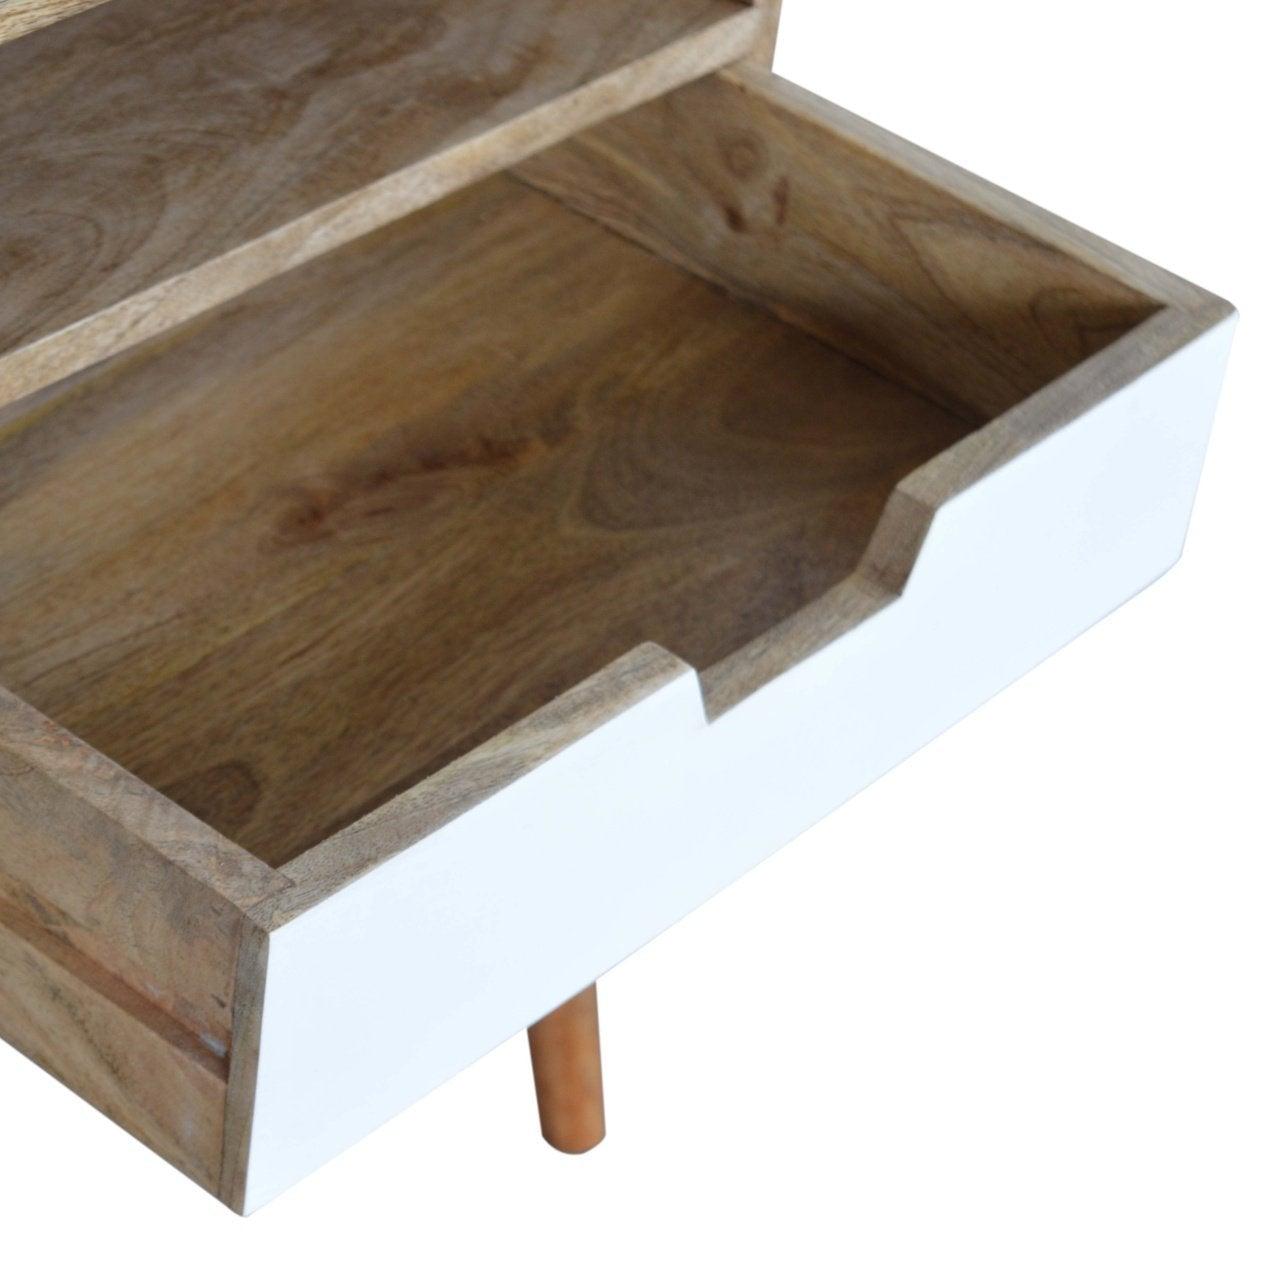 White painted drawer bedside table - crimblefest furniture - image 5